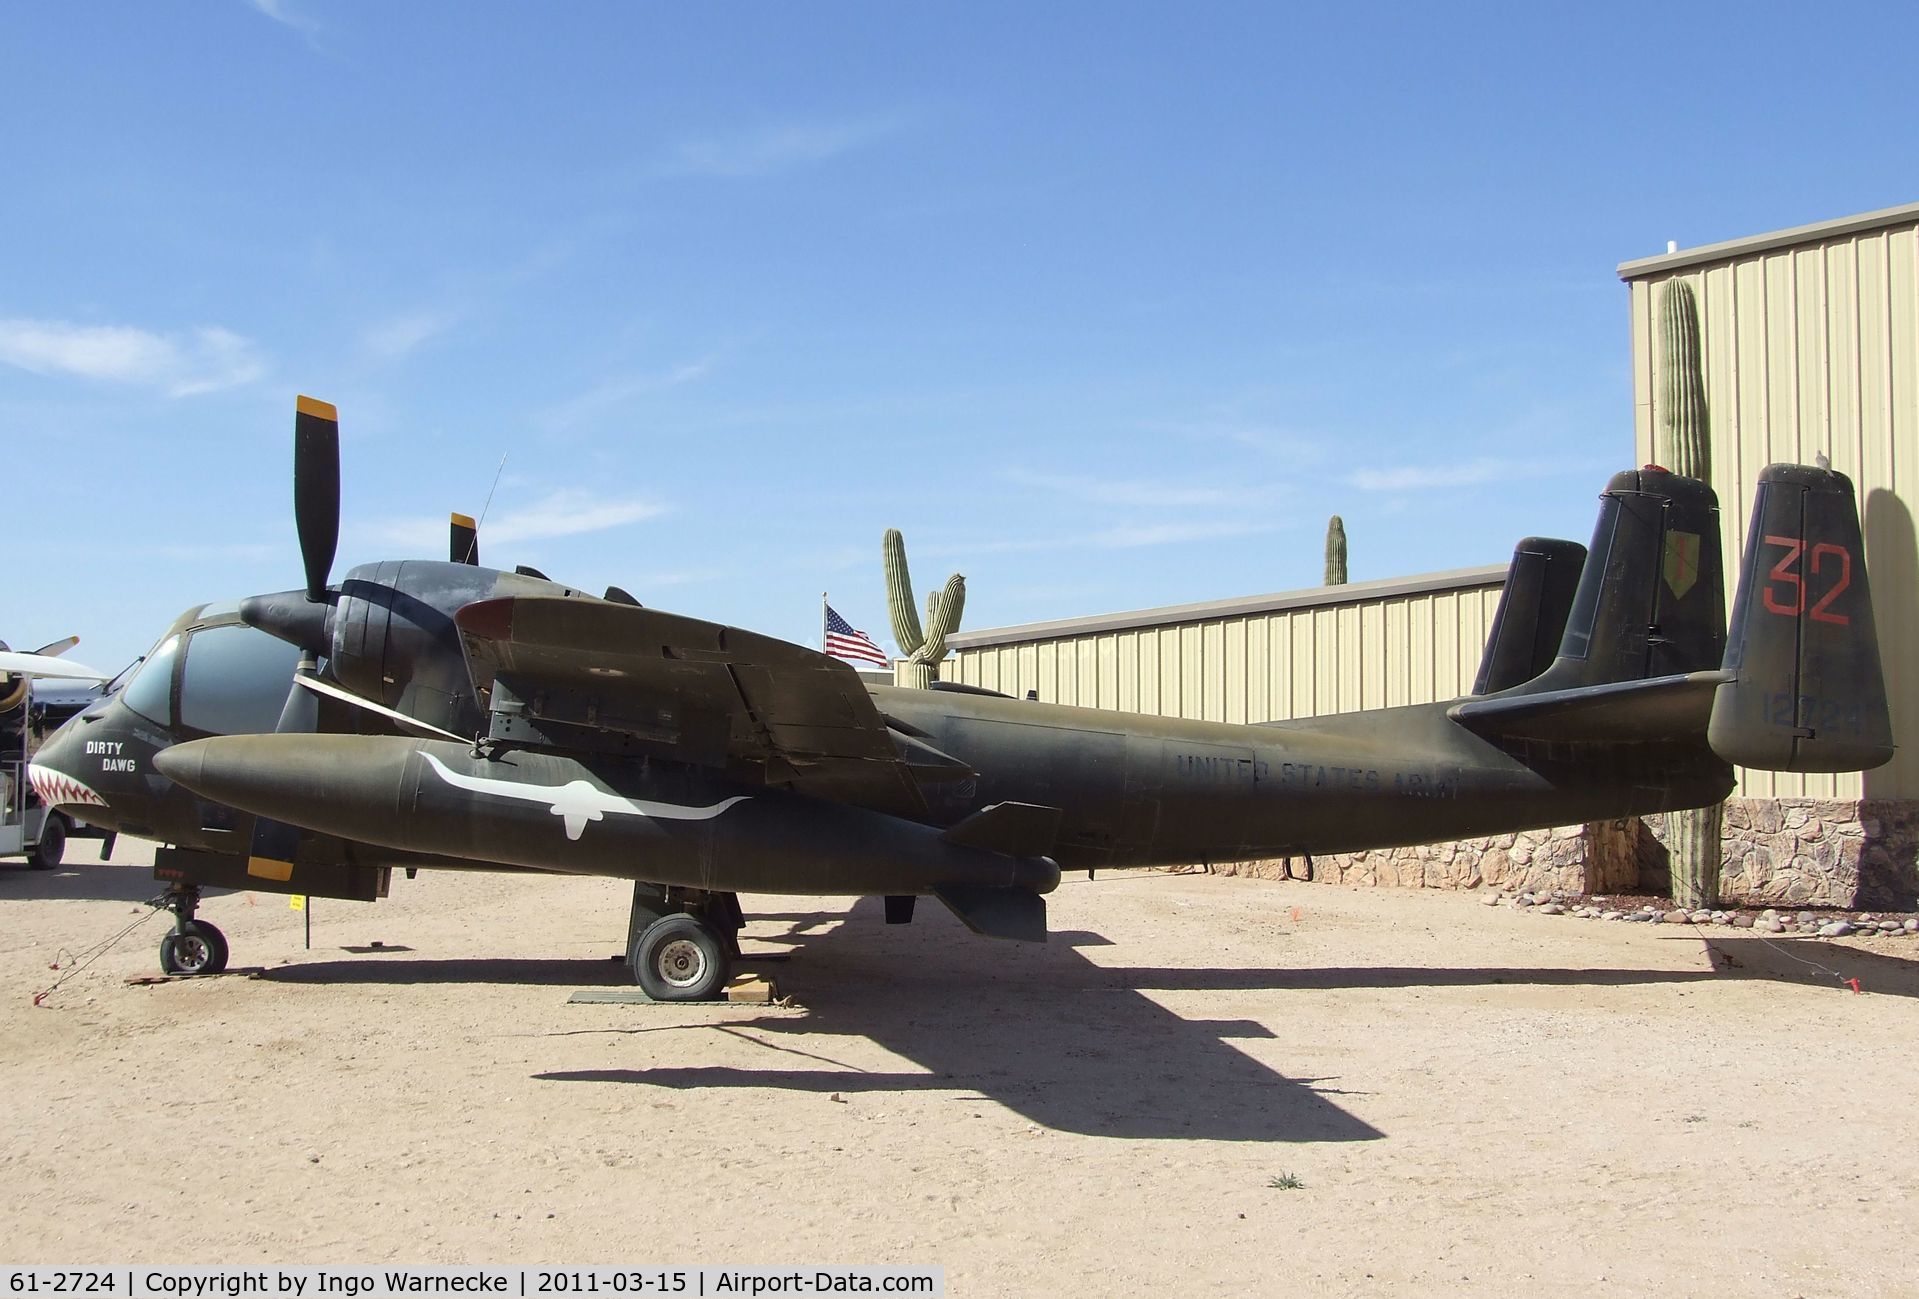 61-2724, 1961 Grumman OV-1C Mohawk C/N 67C, Grumman OV-1C Mohawk at the Pima Air & Space Museum, Tucson AZ